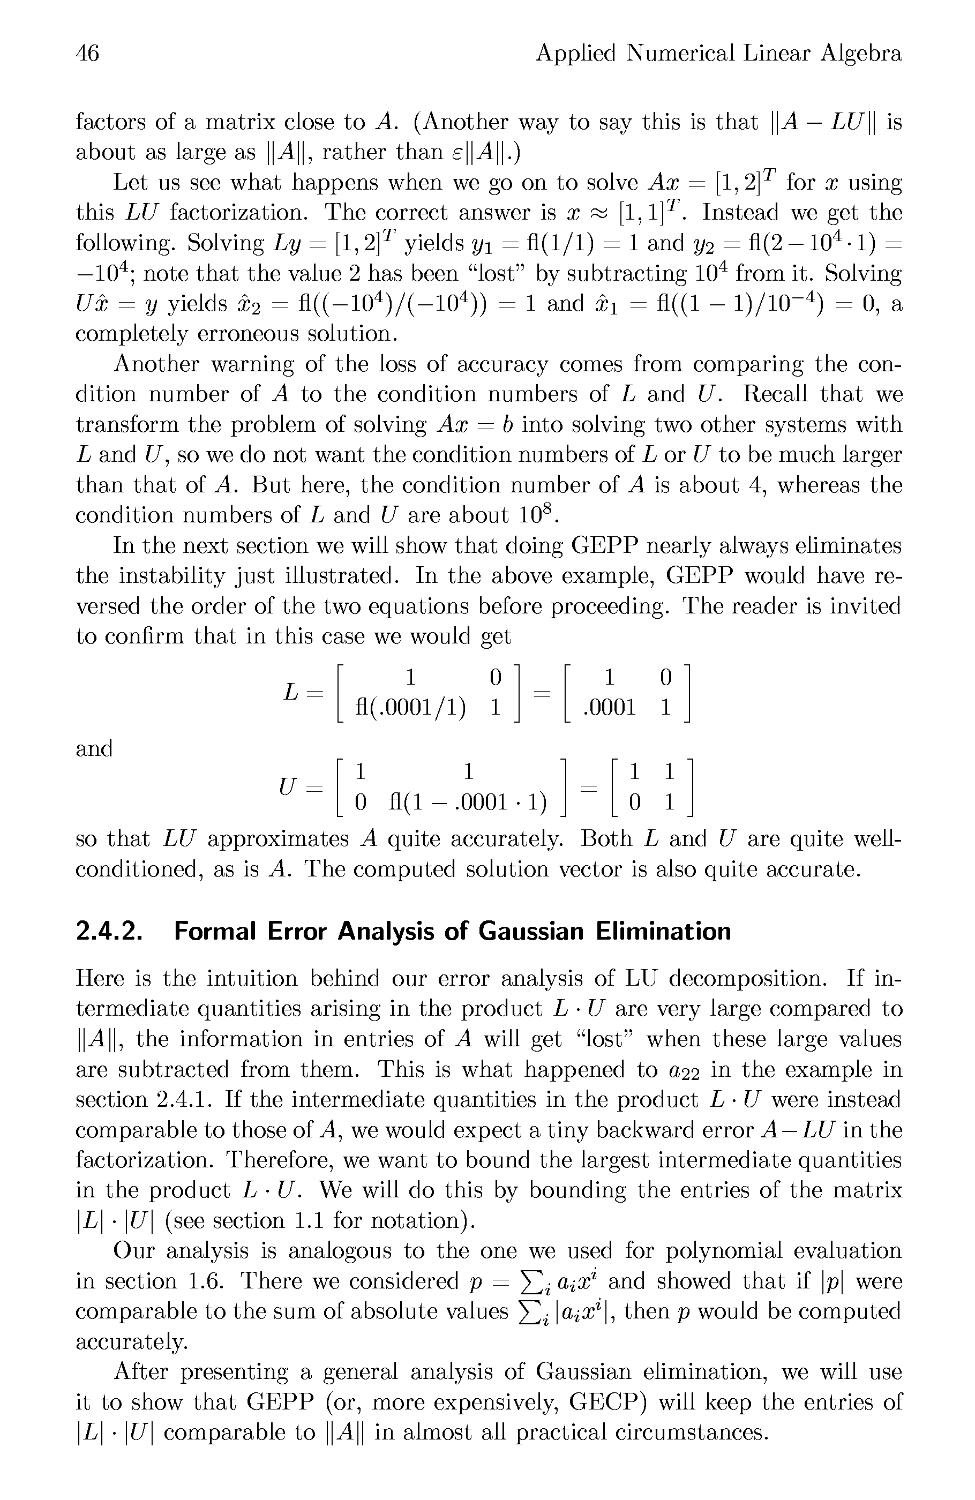 2.4.2 Formal Error Analysis of Gaussian Elimination